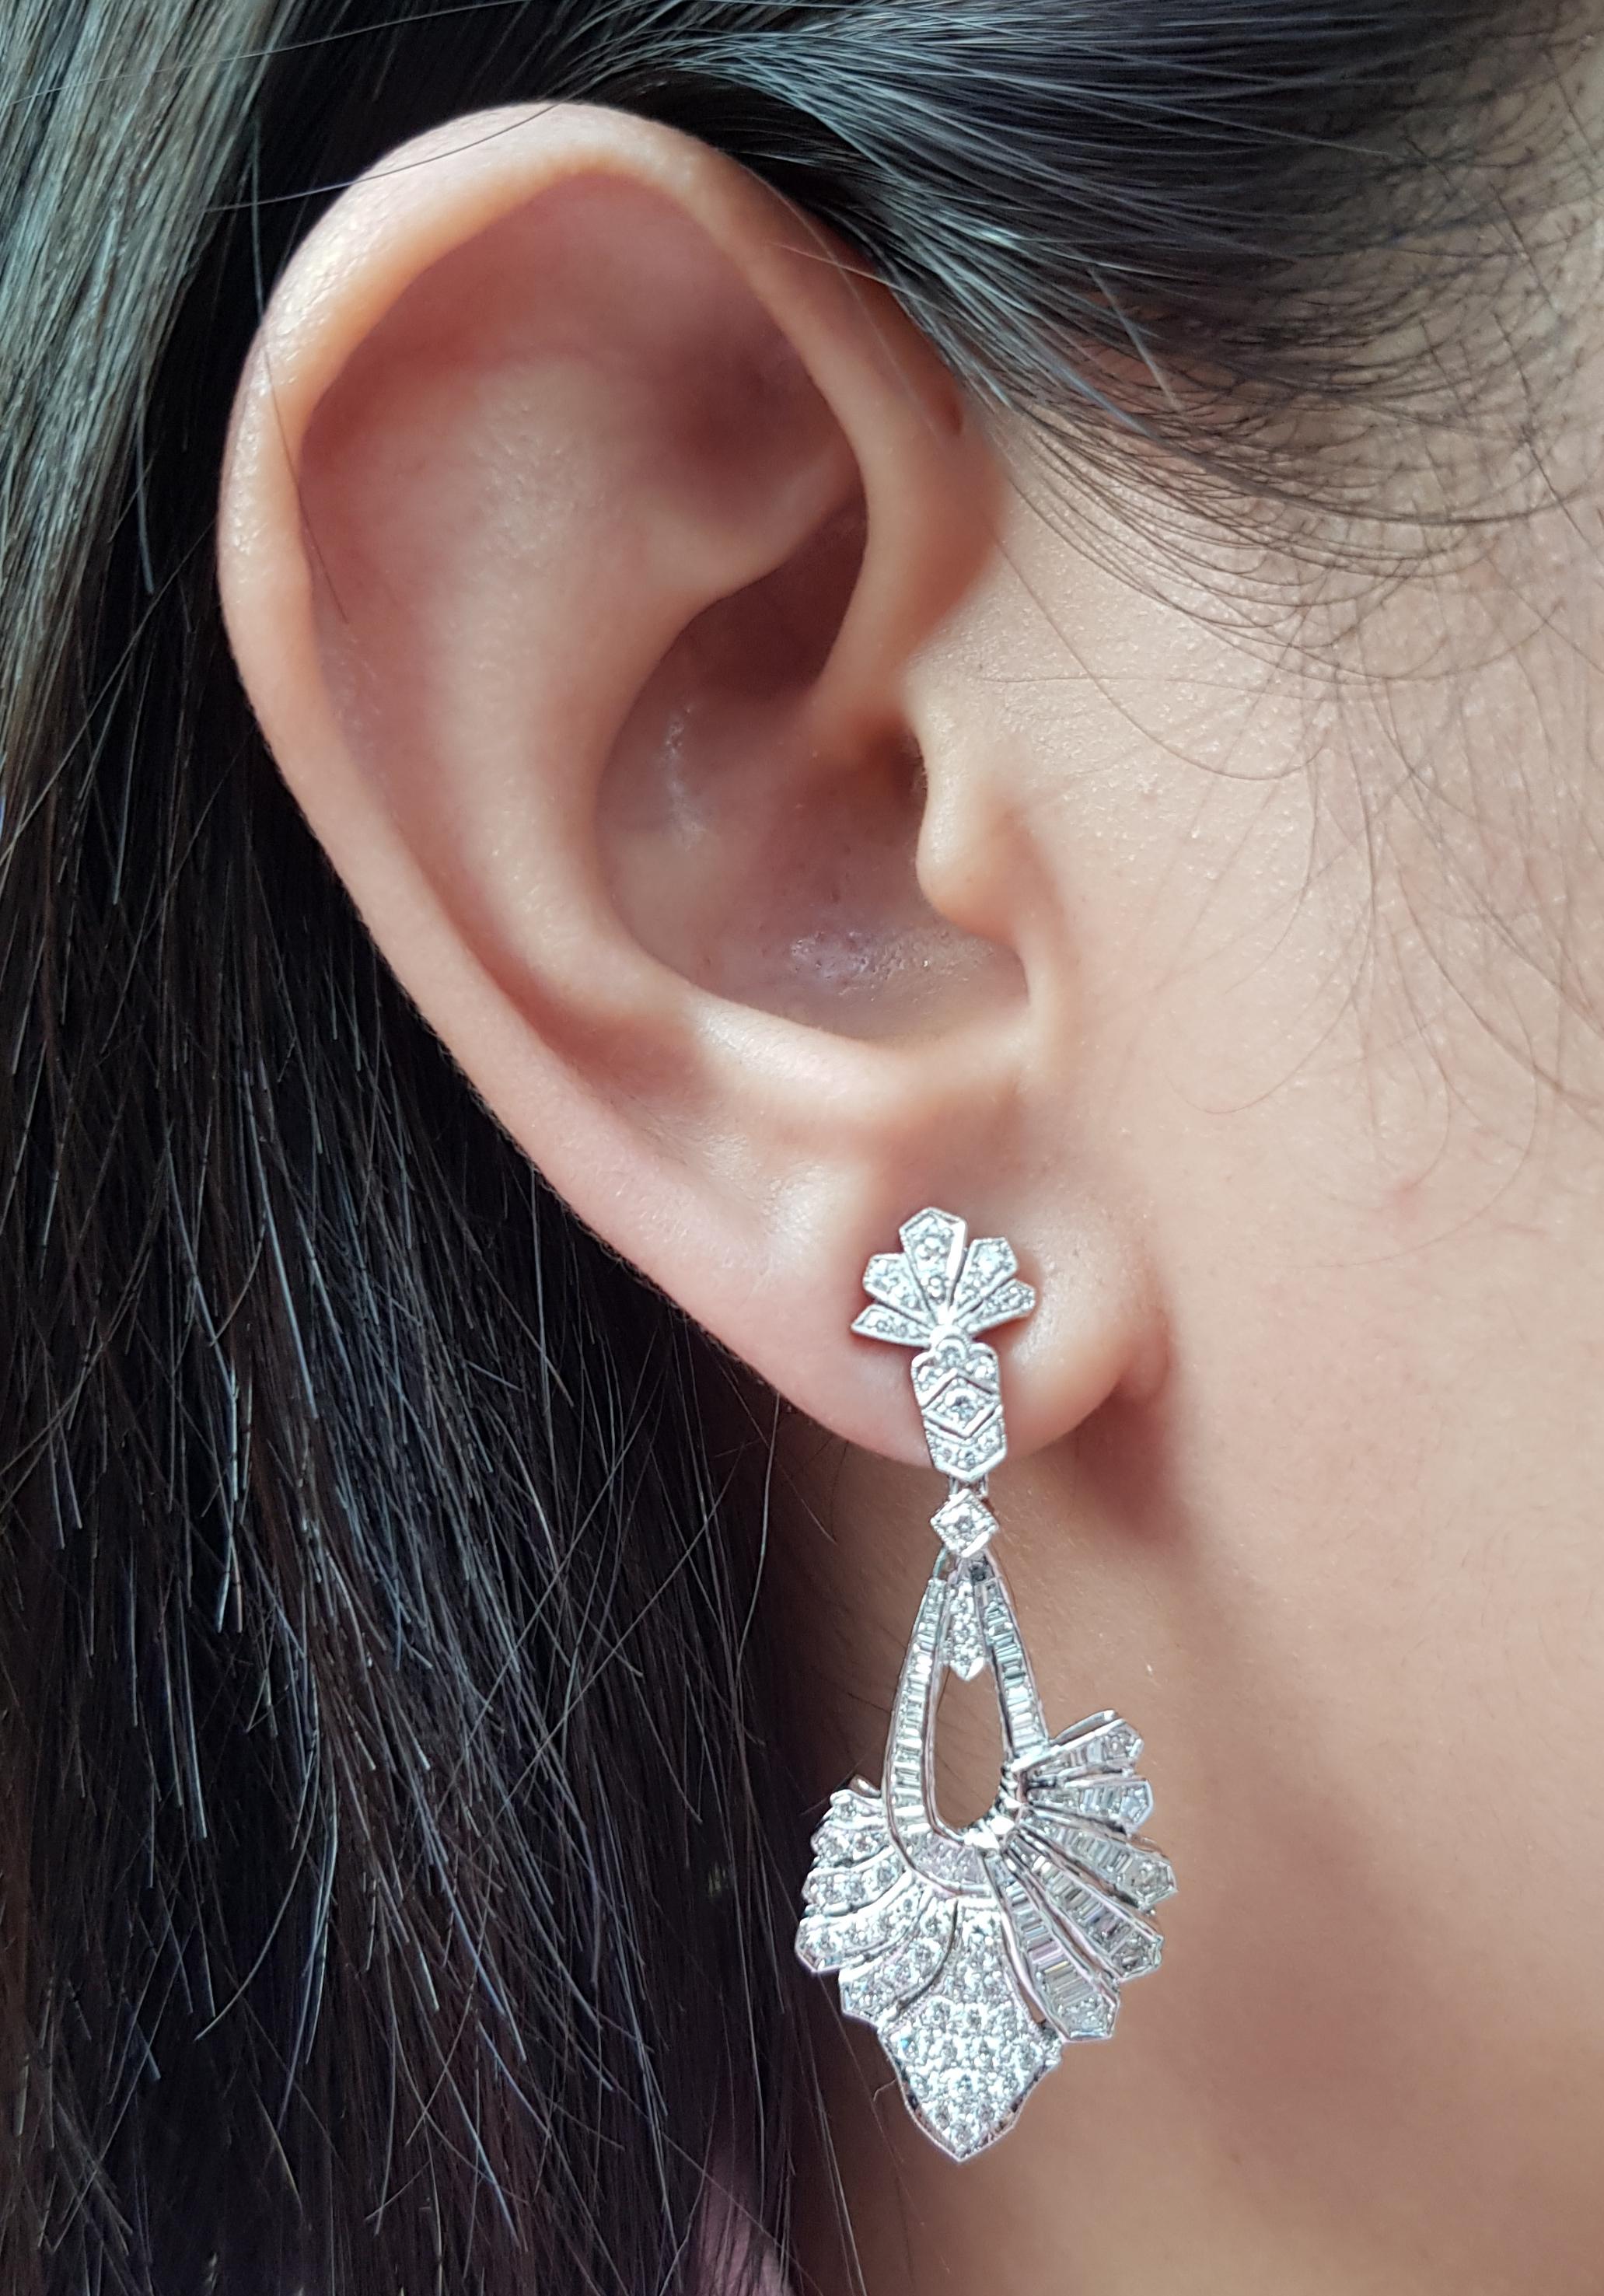 Diamond 2.45 carats Earrings set in 18 Karat White Gold Settings

Width:  1.8 cm 
Length: 4.5 cm
Total Weight: 12.71 grams

